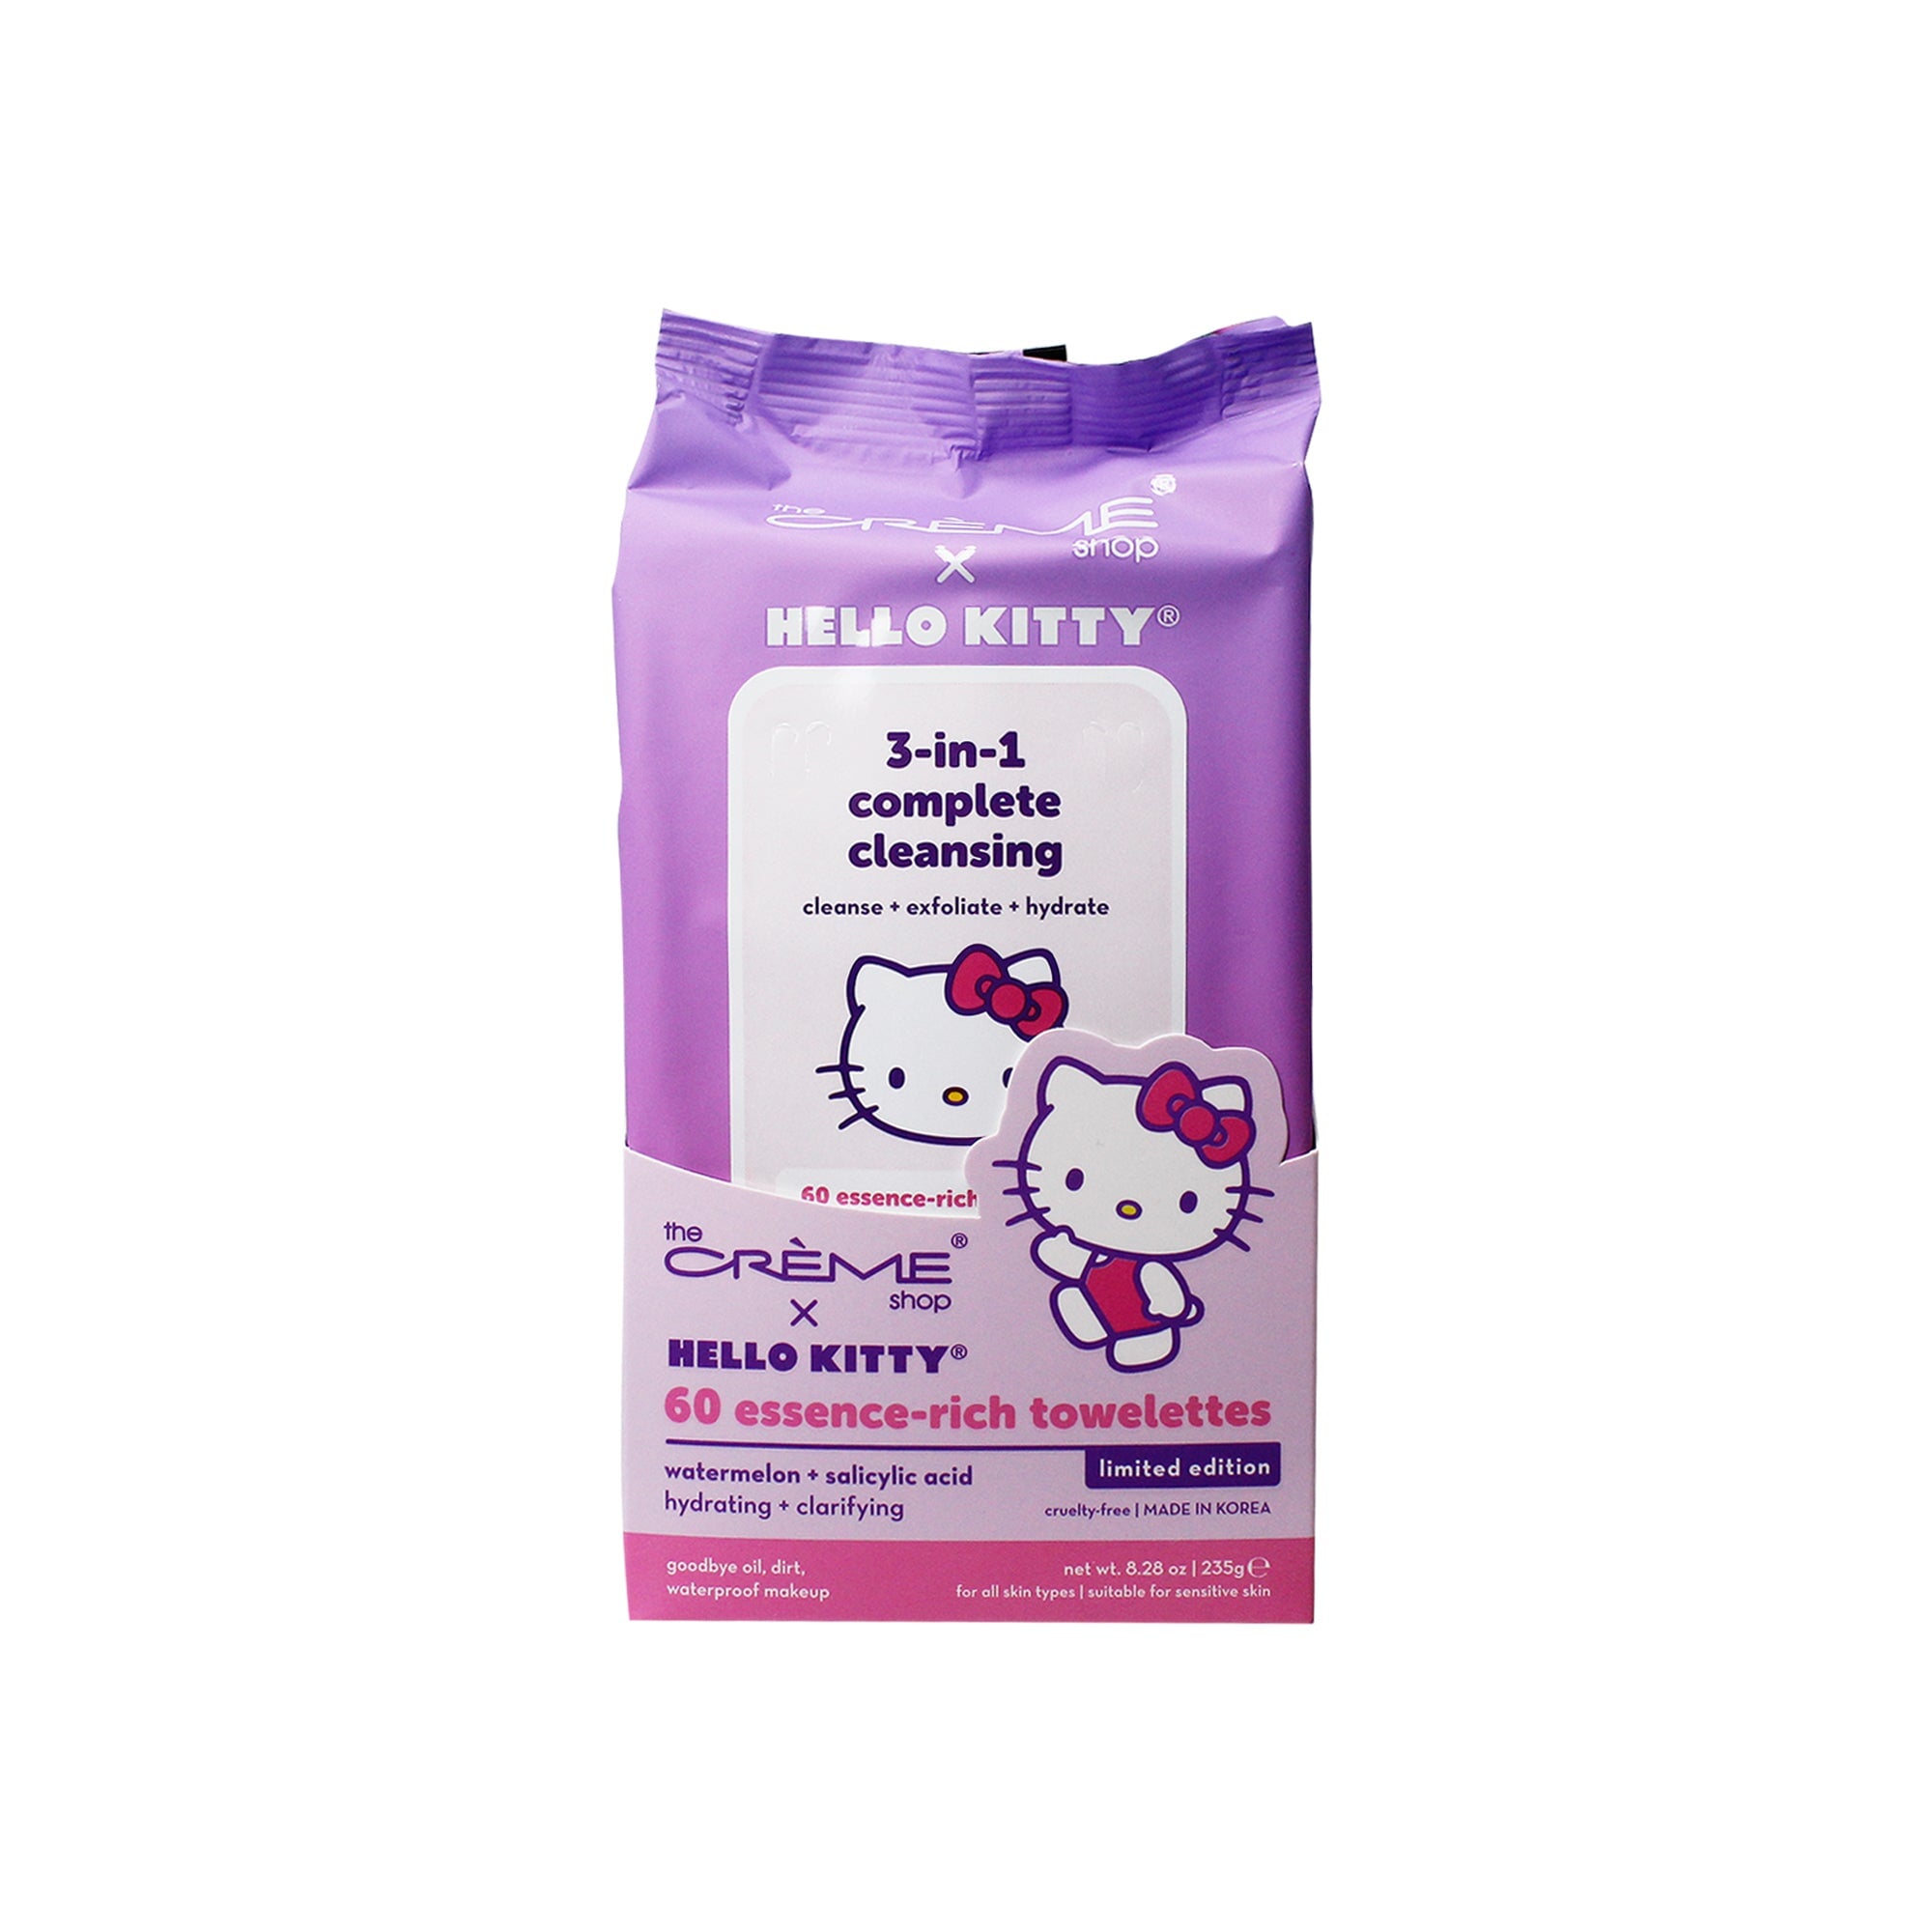 The Crème Shop x Hello Kitty(Purple) 3-In-1 Cleansing Towelettes - Watermelon Towelettes The Crème Shop x Sanrio 